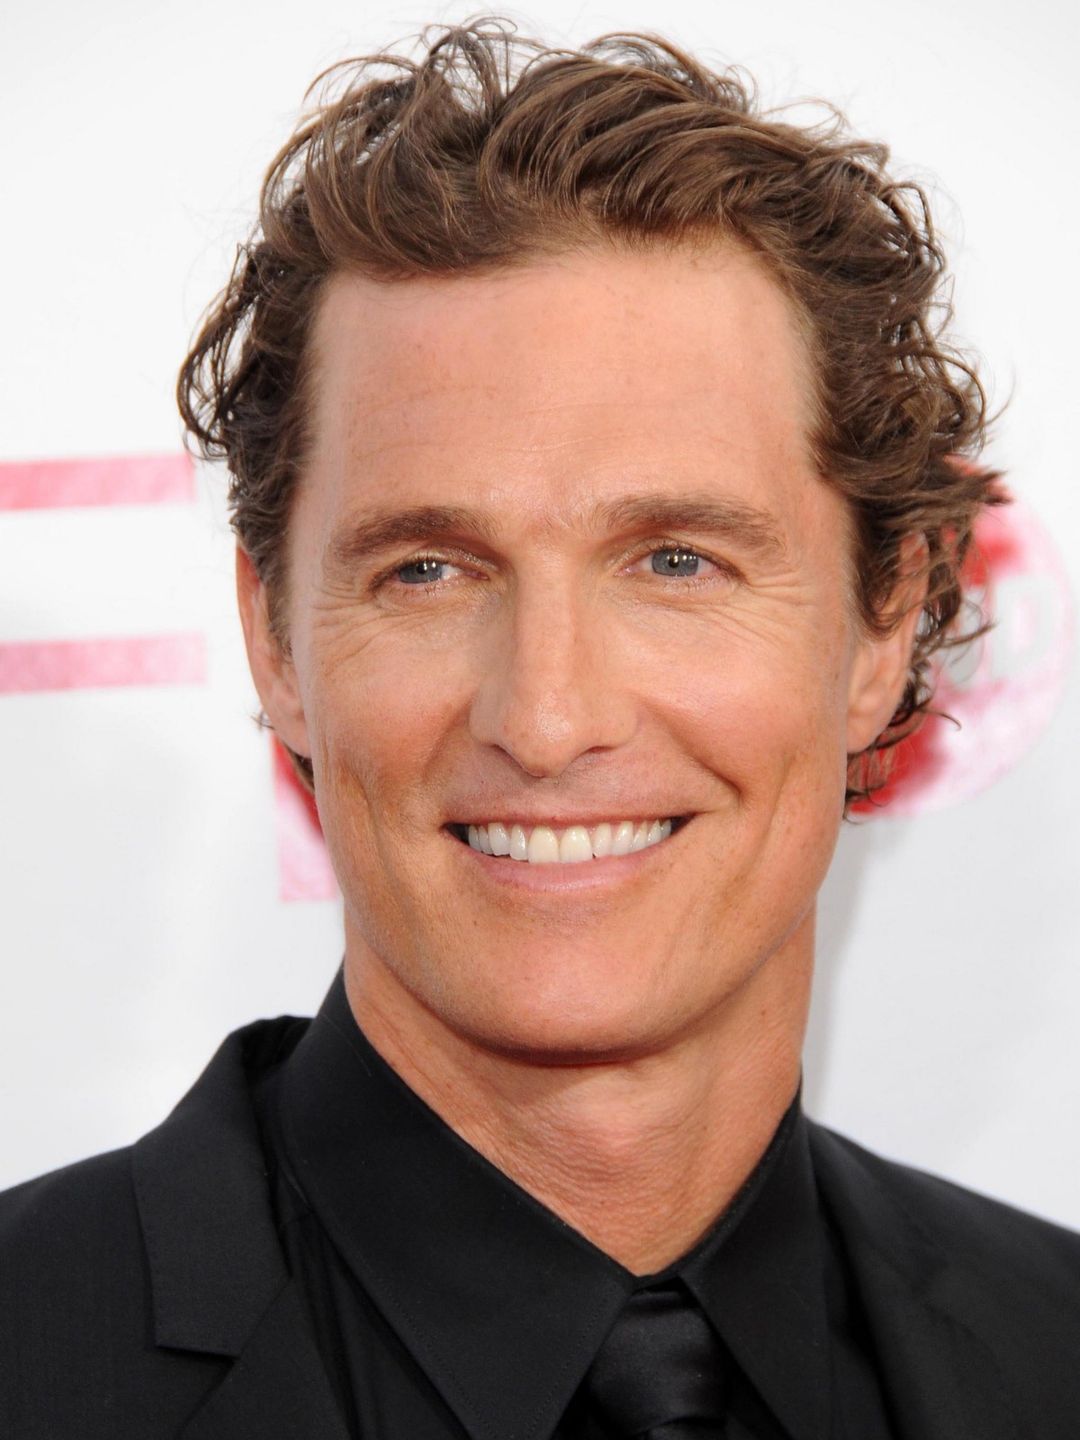 Matthew McConaughey ethnicity